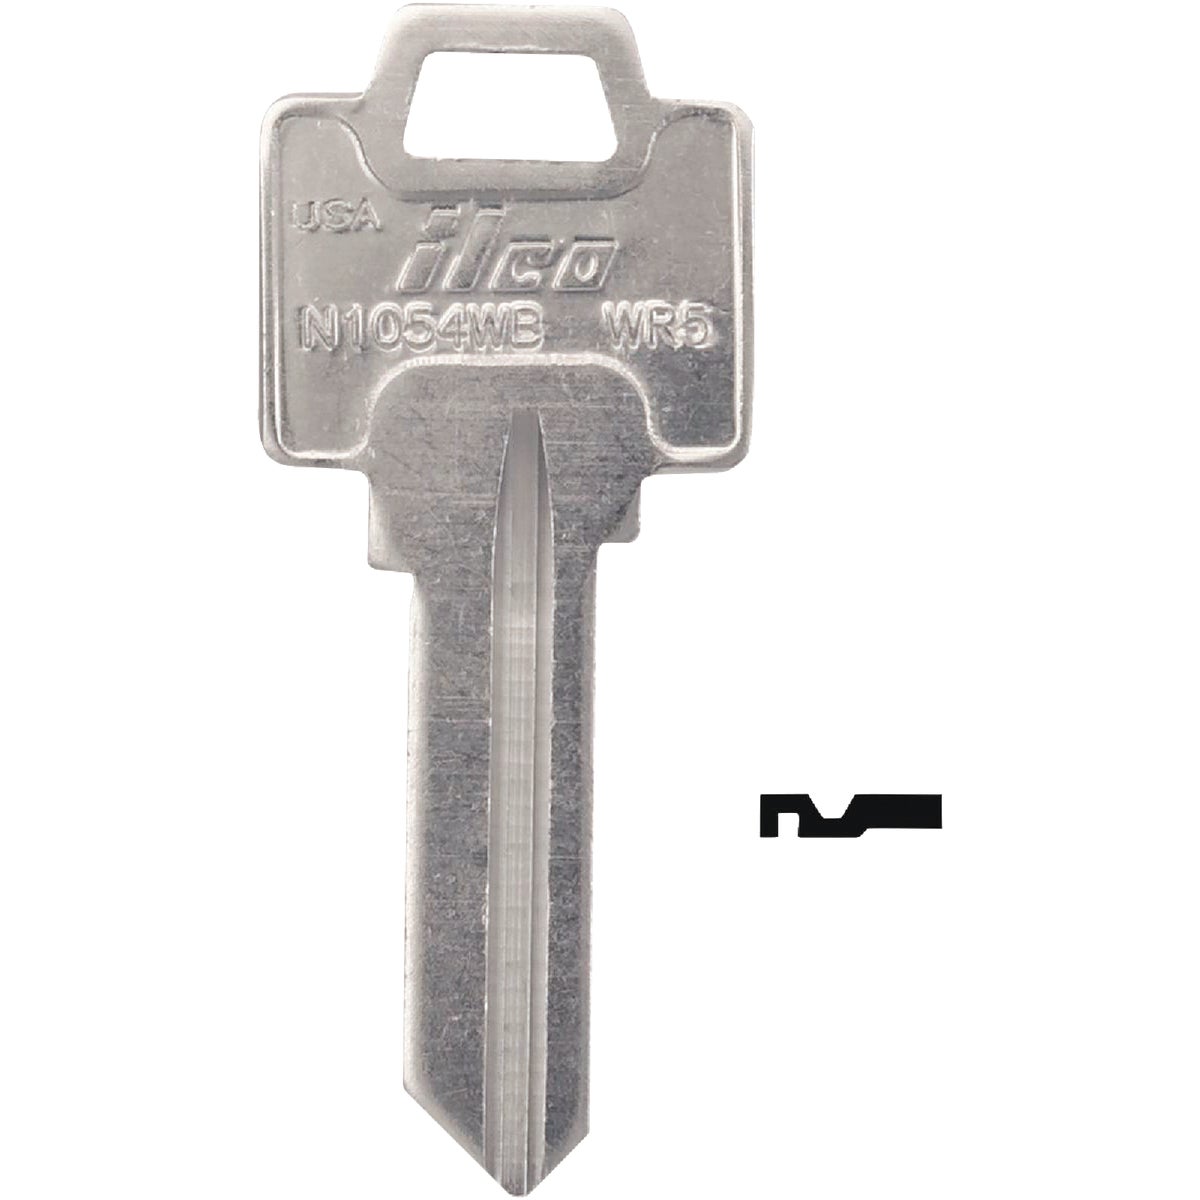 ILCO Key Blank For Weiser Lockset 5-Pin / N1054WB (10-Pack)